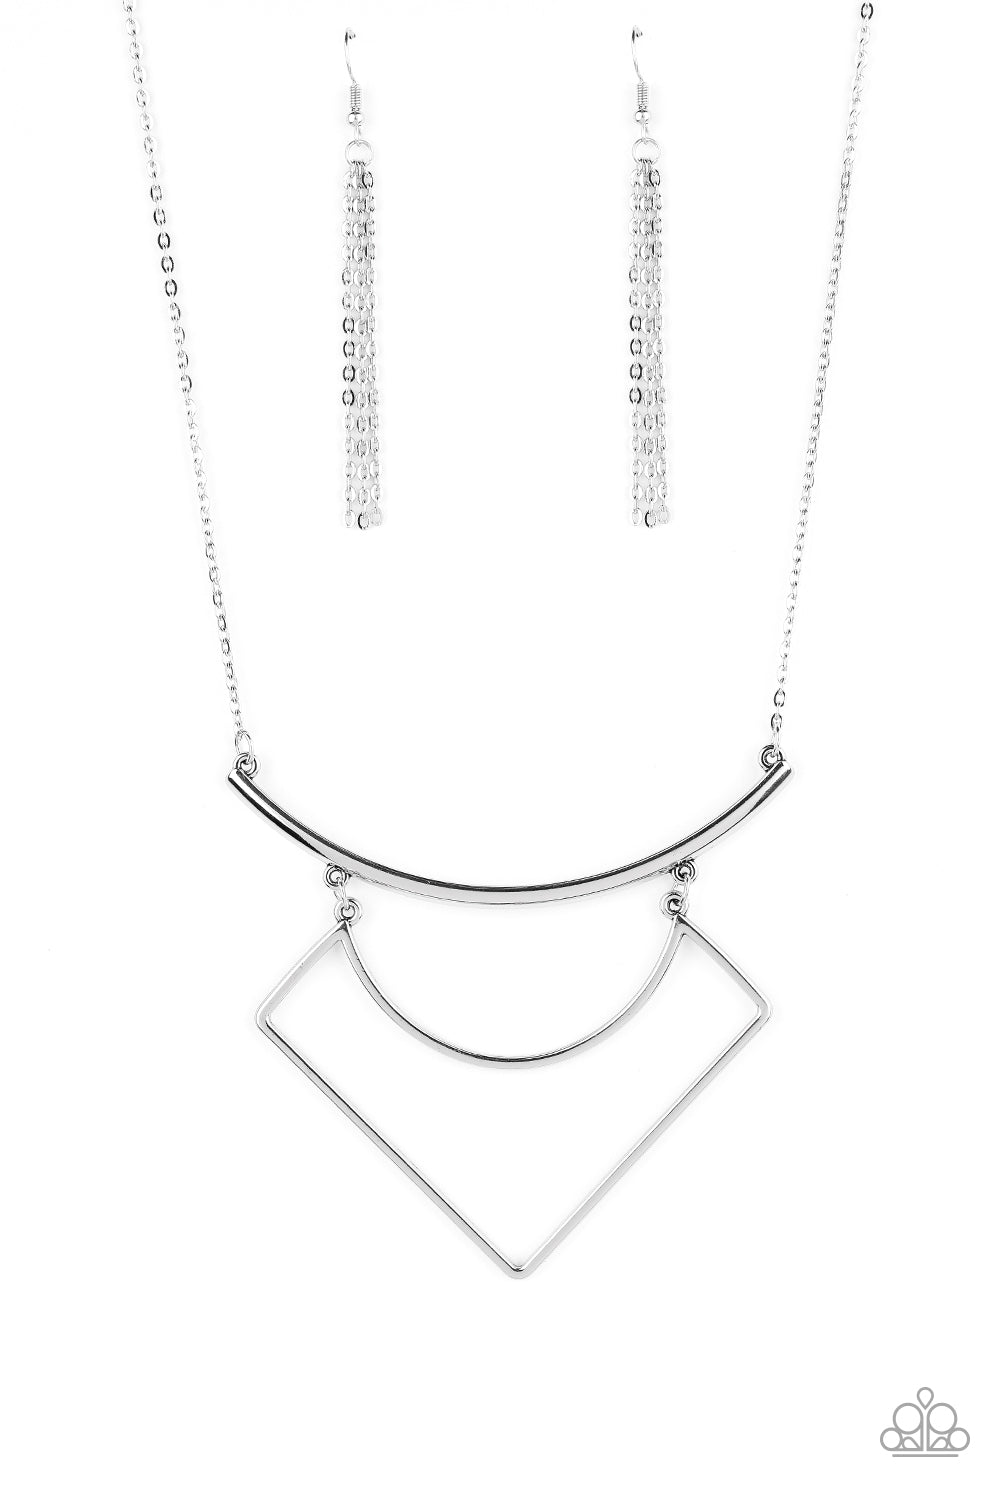 Egyptian Edge - silver - Paparazzi necklace